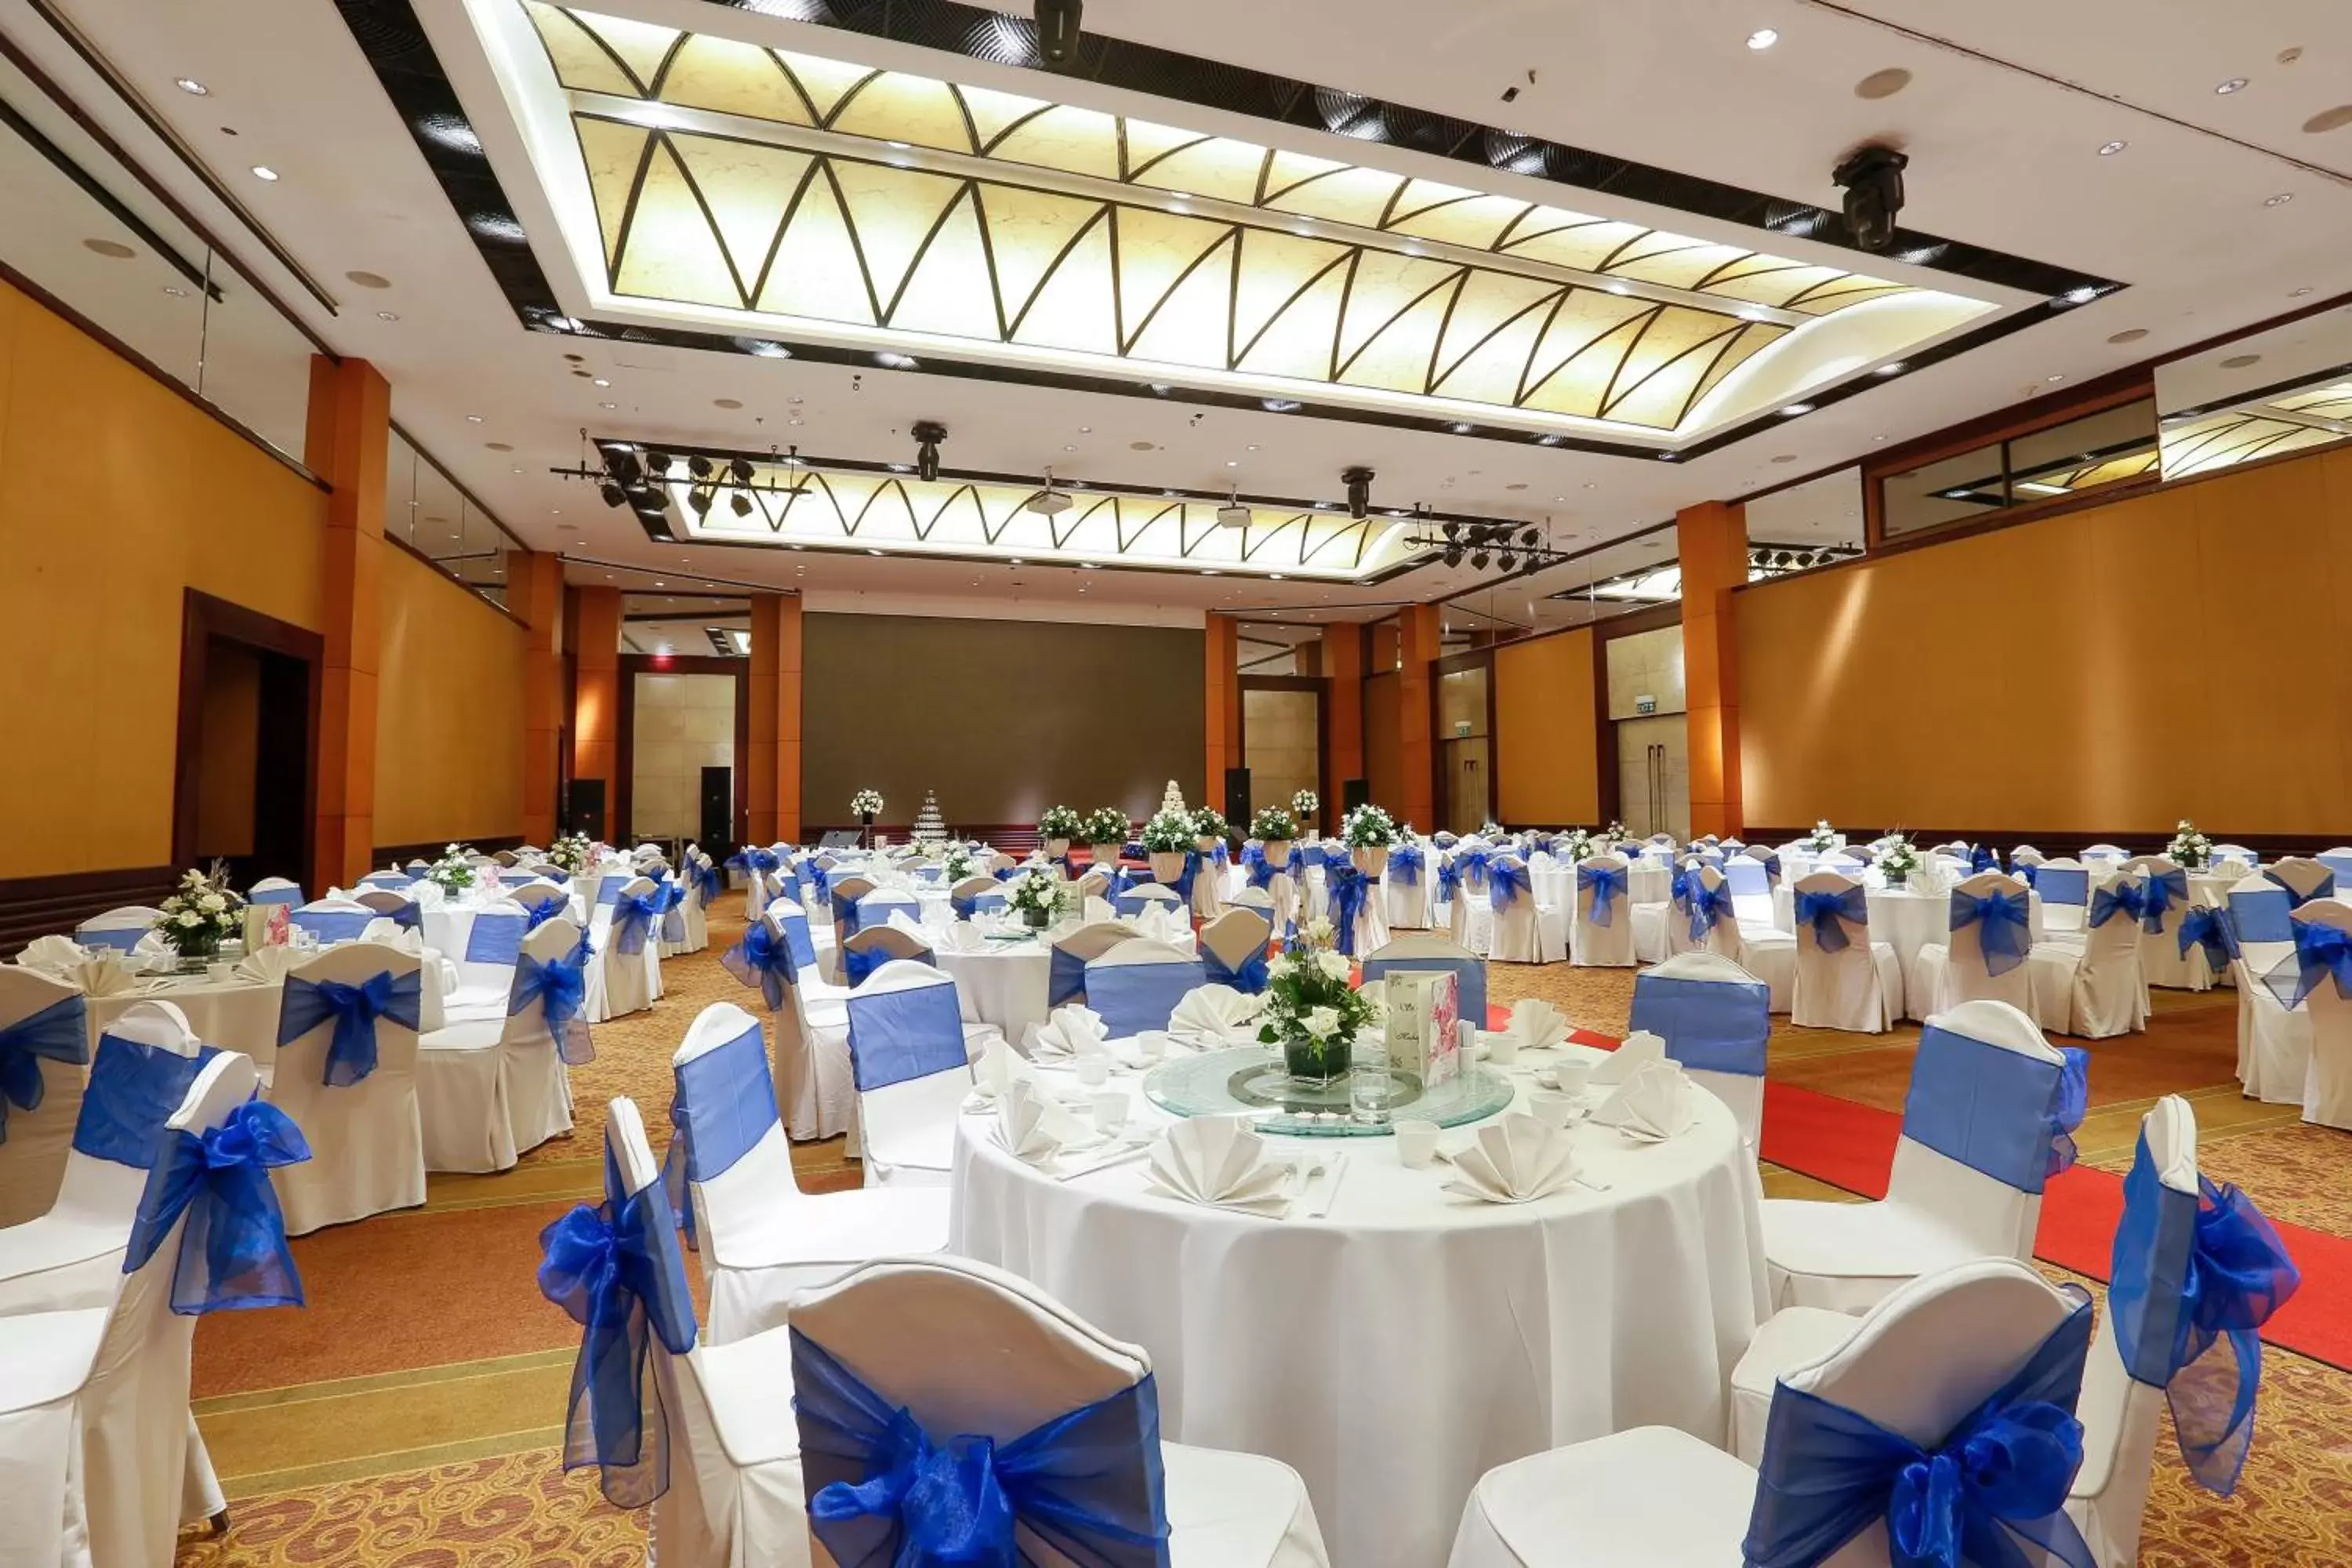 Banquet/Function facilities, Banquet Facilities in Hotel Equatorial Ho Chi Minh City